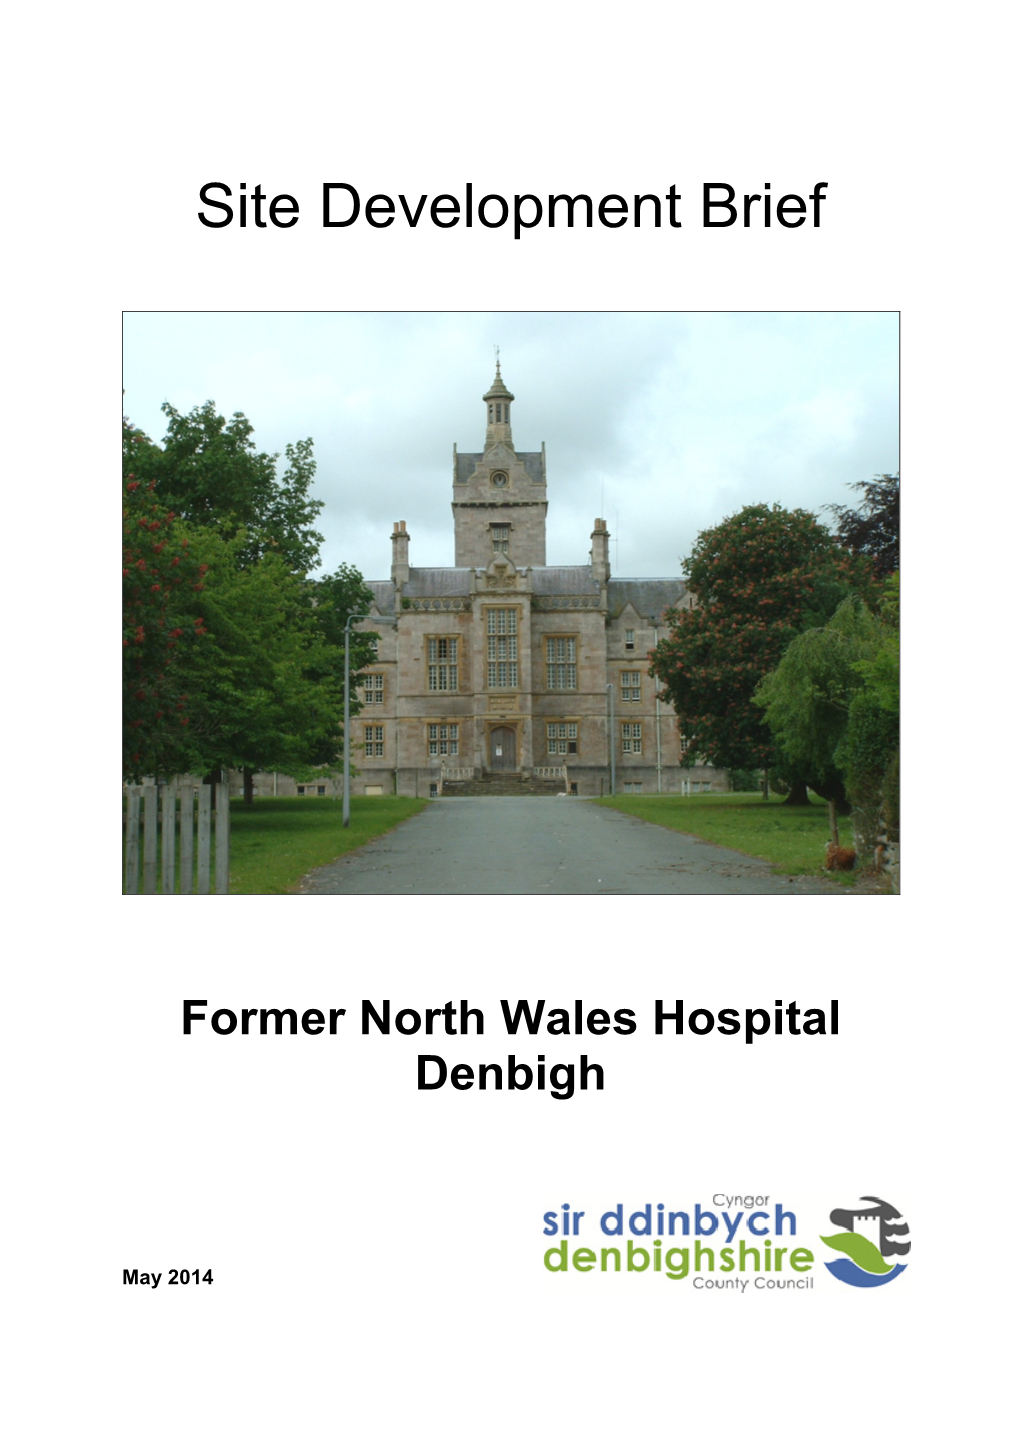 Site Development Brief: Former North Wales Hospital Denbigh